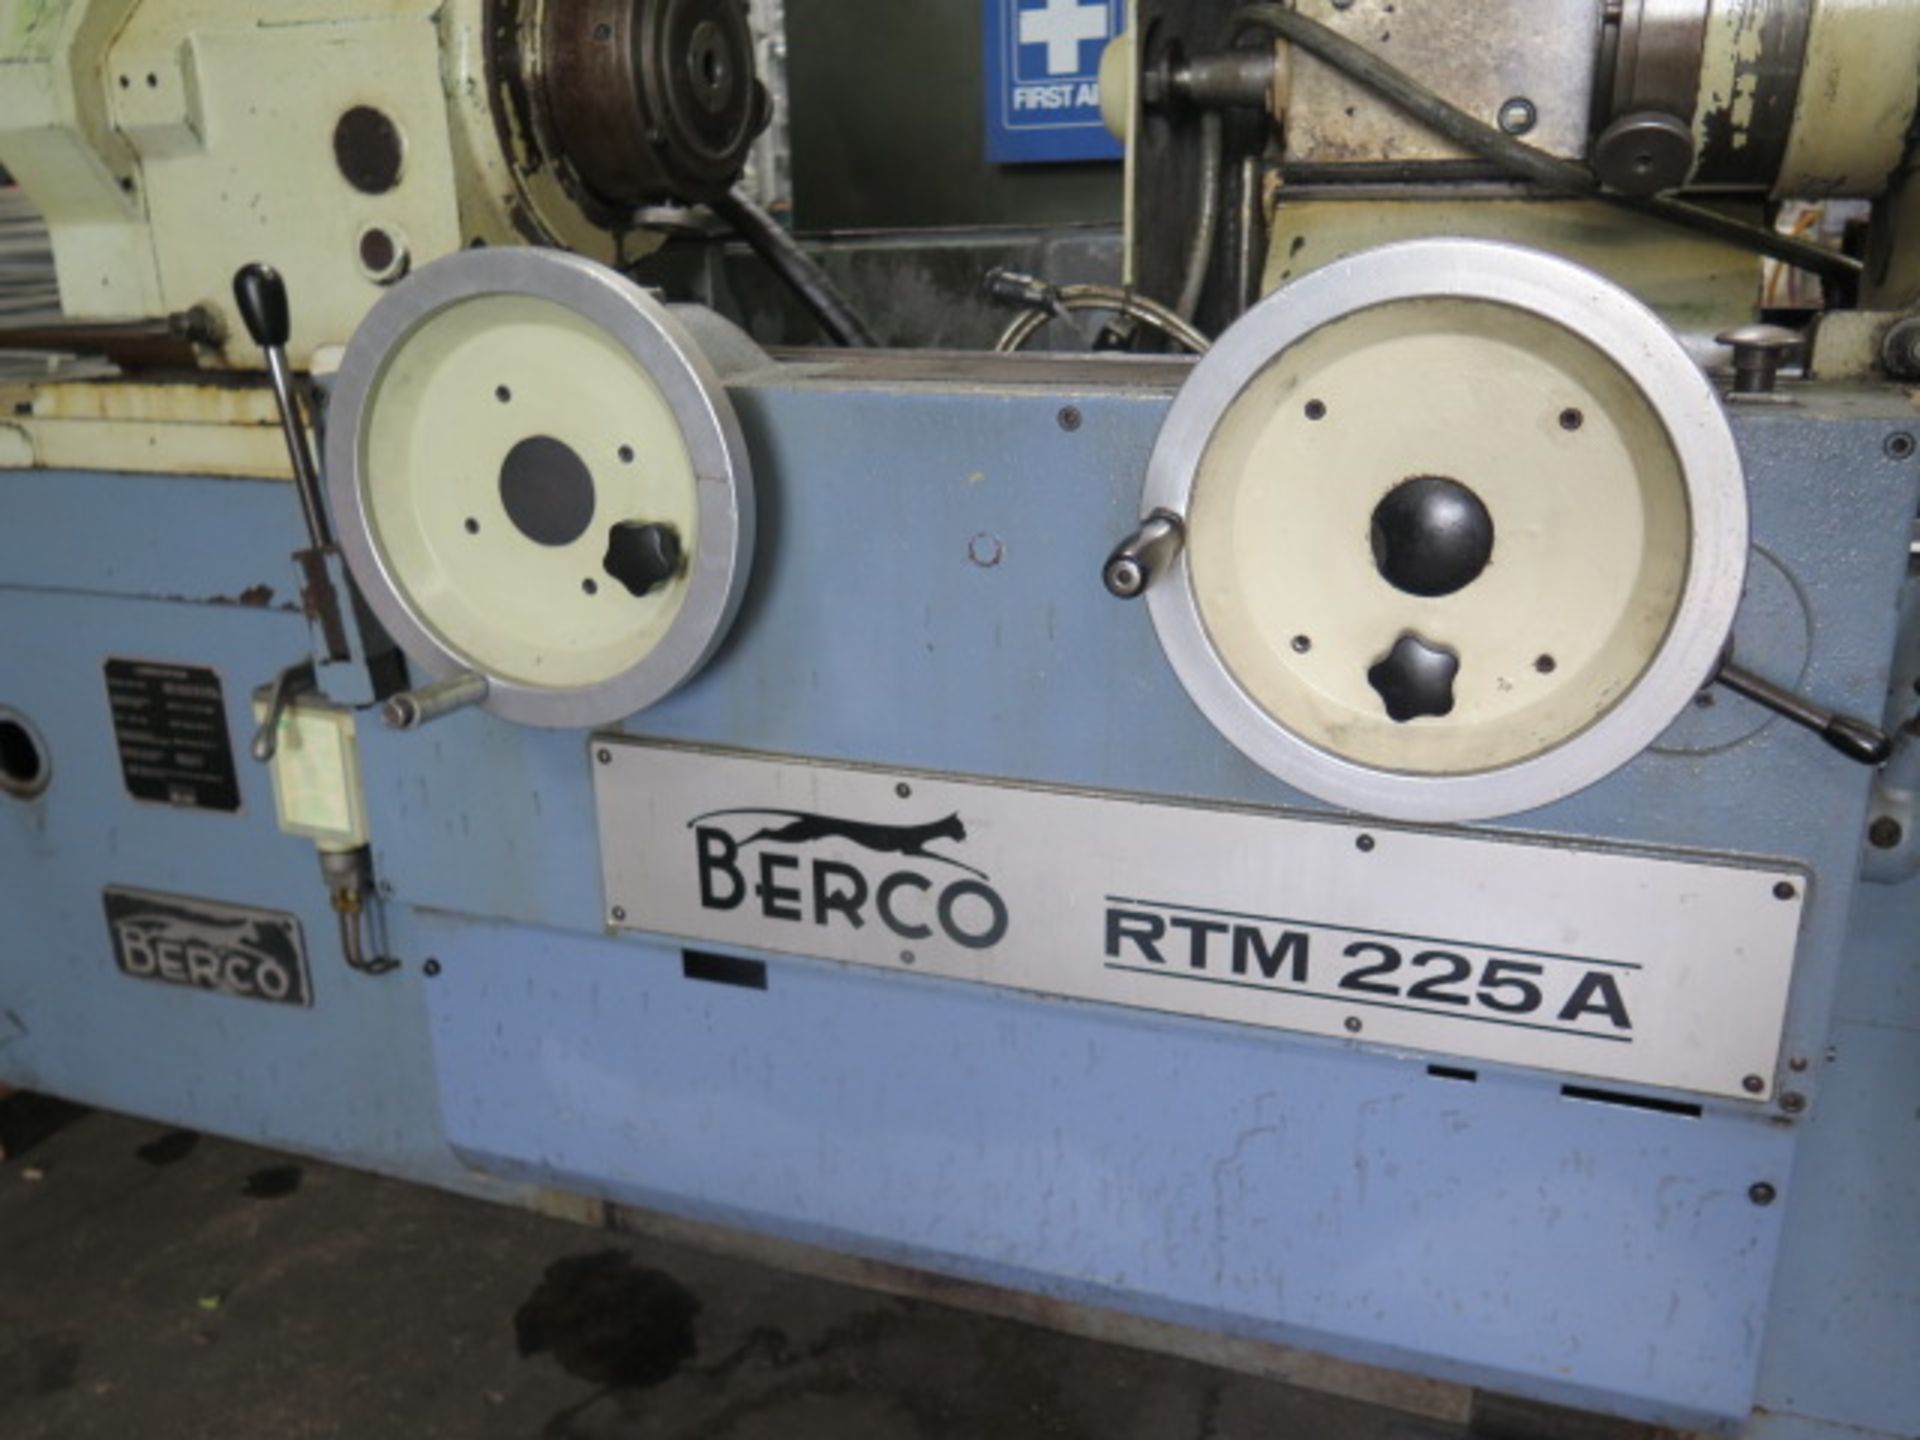 Berco RTM 225A40 Crank Shaft Grinder s/n 553B, DRO, Motorized Work Head, 17 ½” x 36” Cap, SOLD AS IS - Image 15 of 17